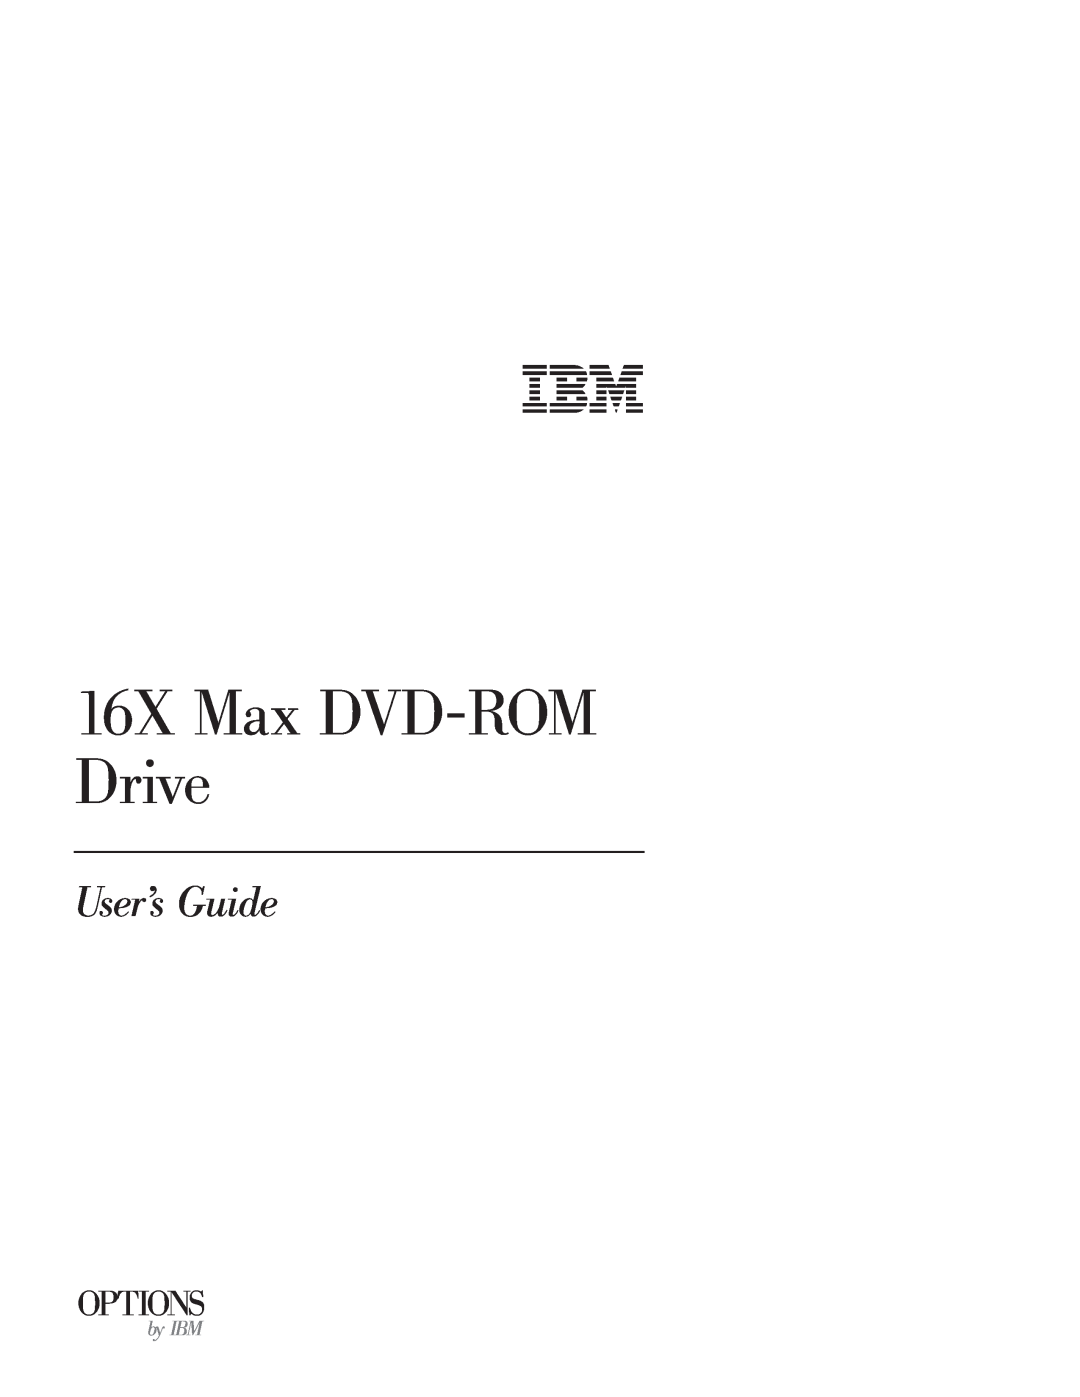 IBM 10K0001 manual 16X Max DVD-ROM Drive, Users Guide, Options, by IBM 